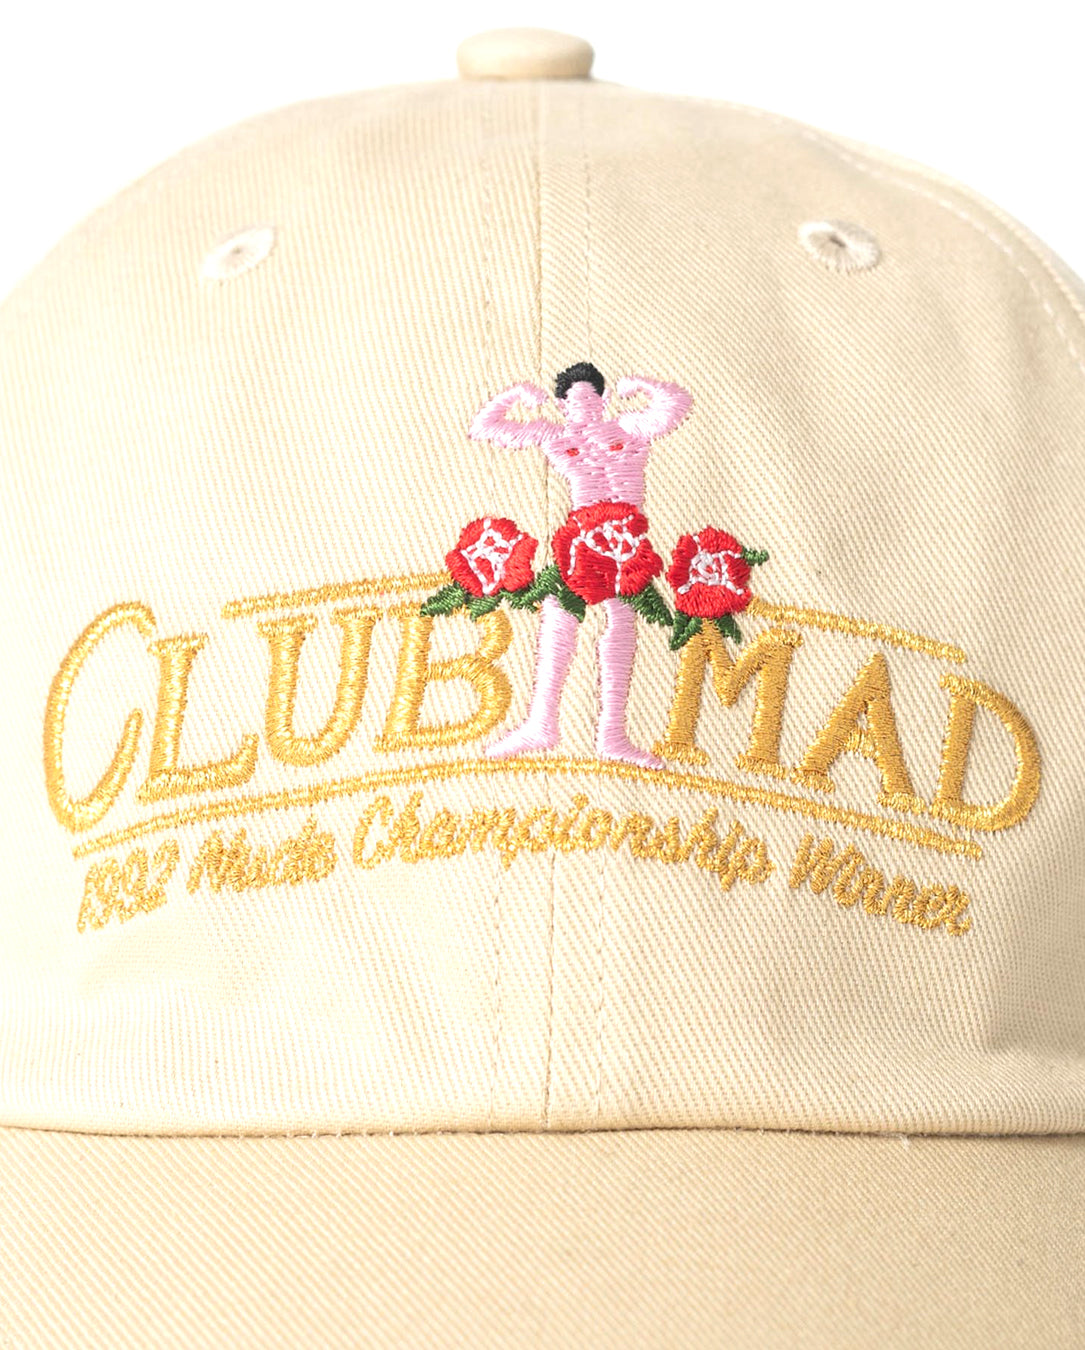 Club Mad 1994 beige